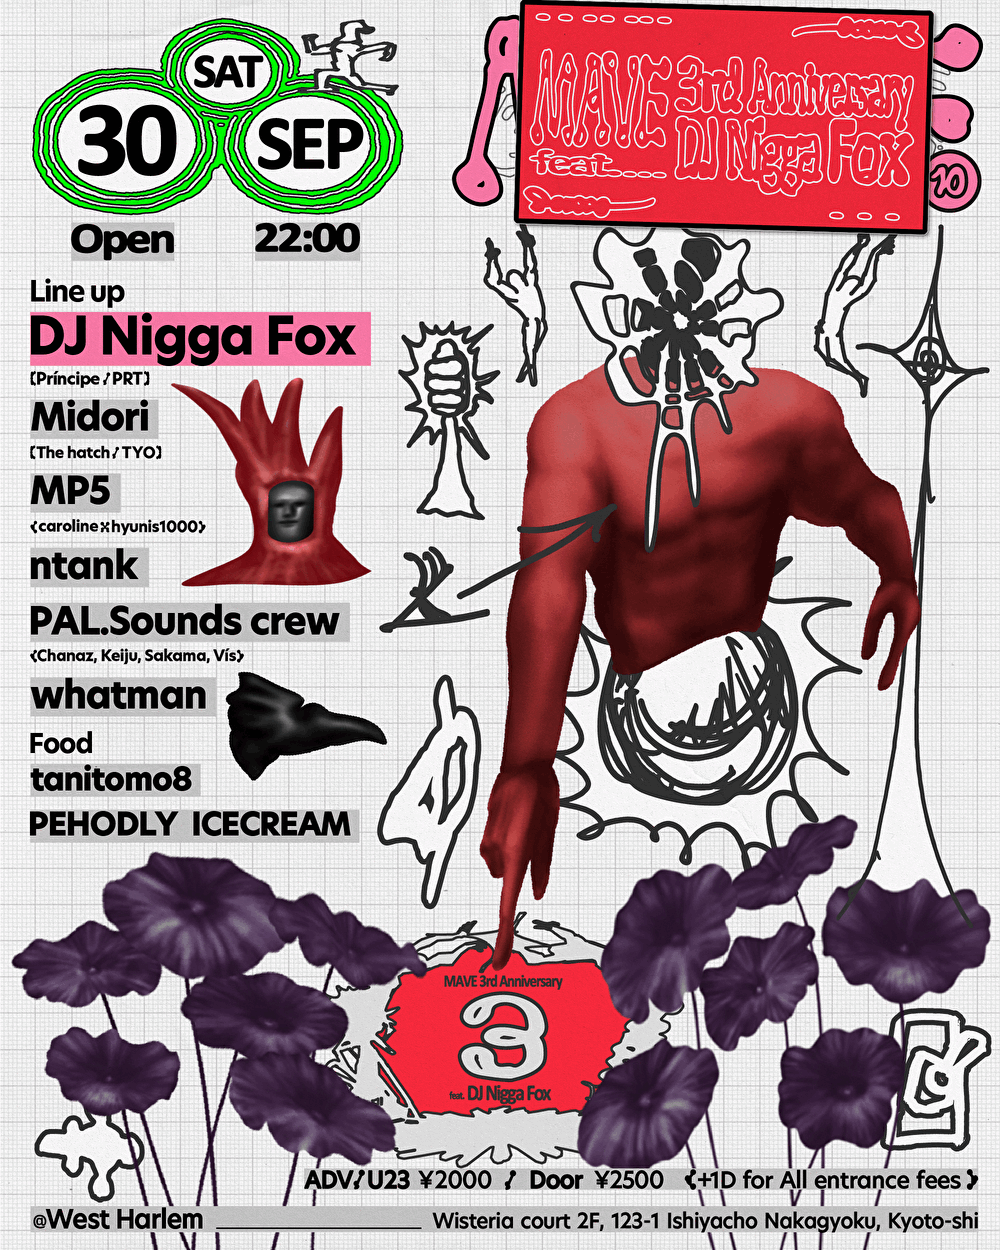 MAVE 3rd Anniversary feat.DJ Nigga Fox